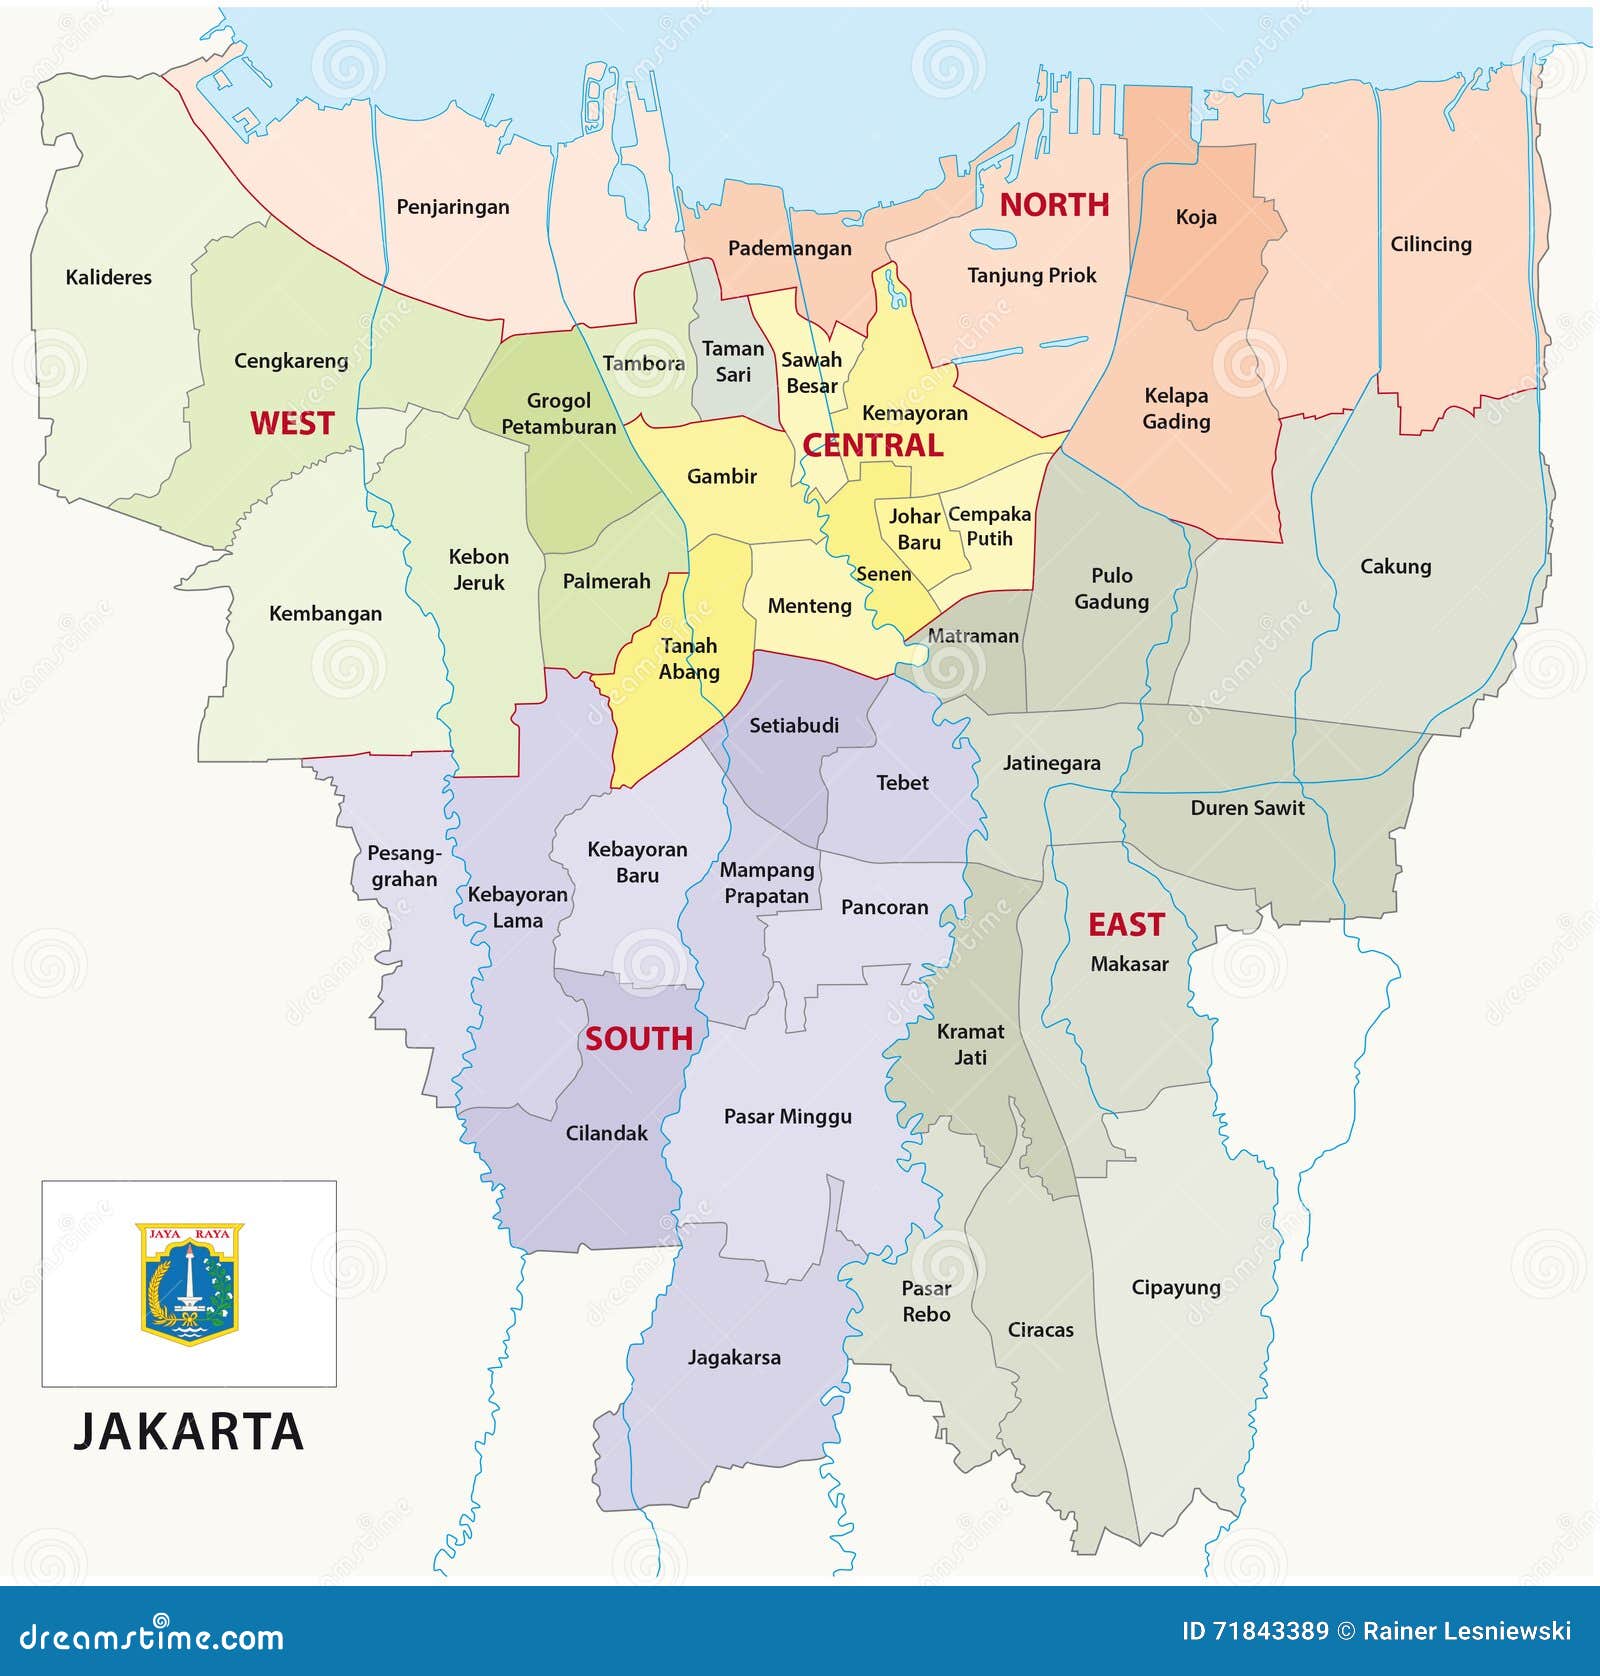  Jakarta  administrative map  stock illustration 